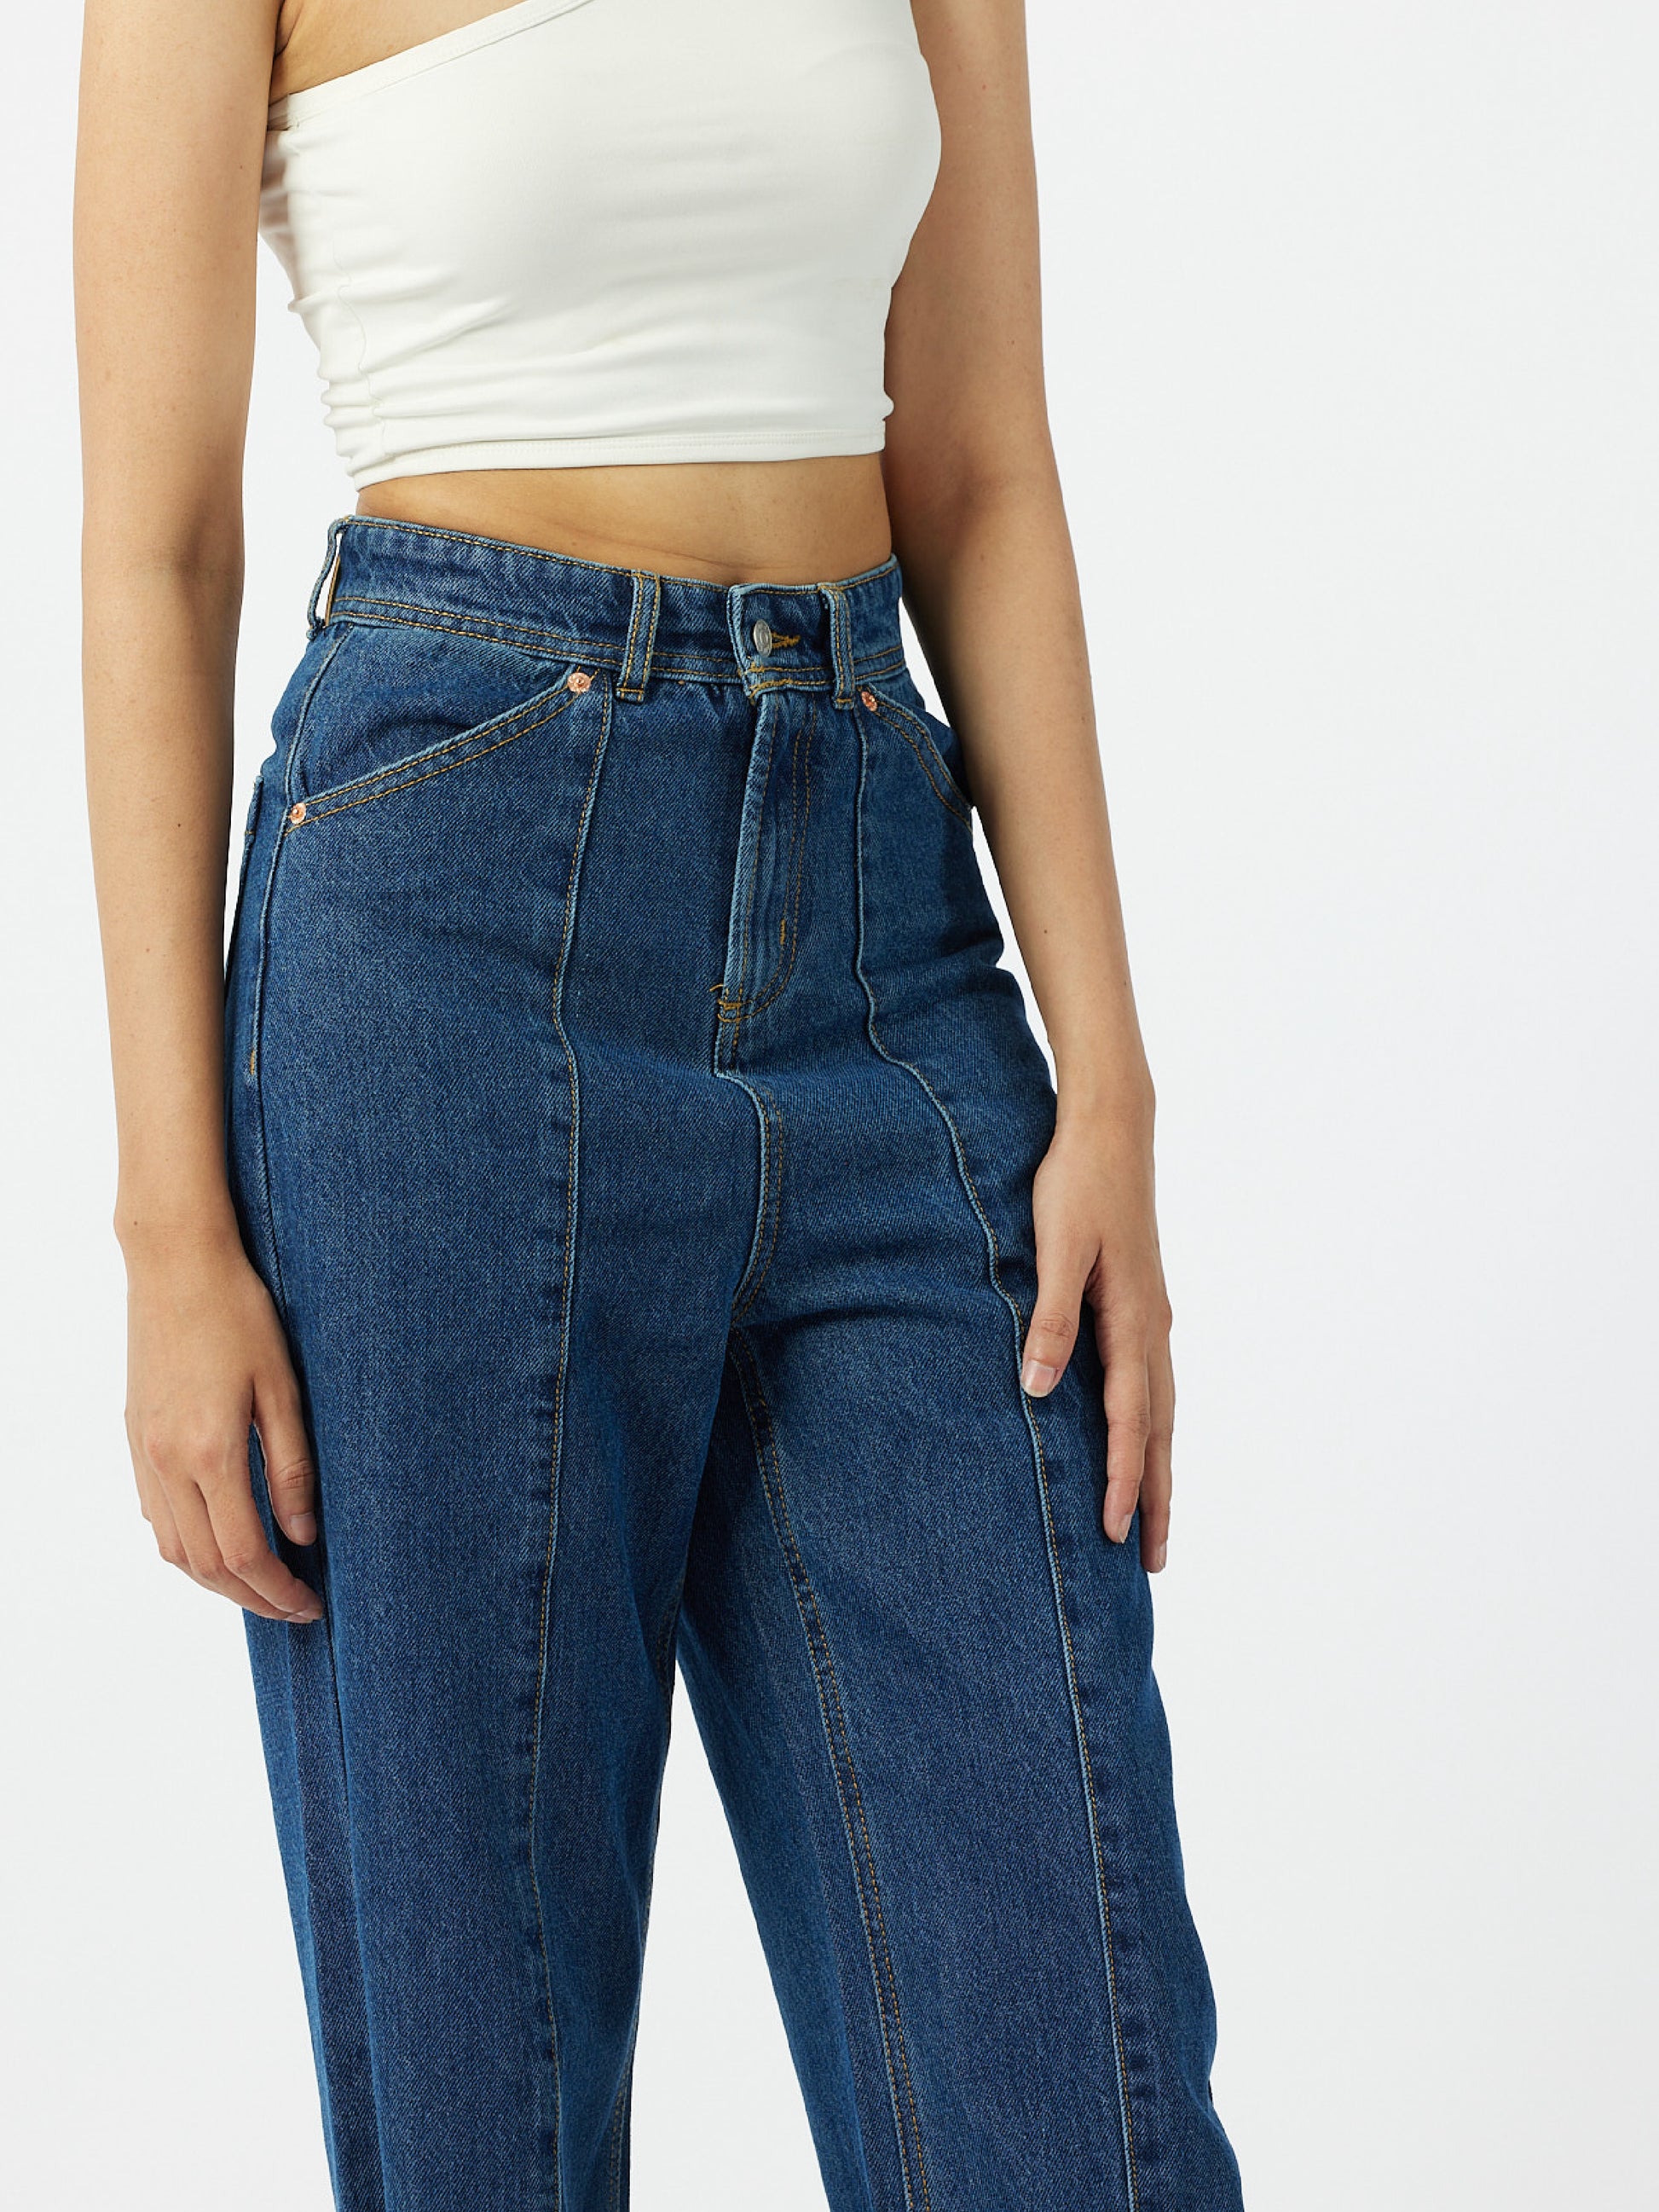 BUY Slit jeans, women's denim pants by KOOVS